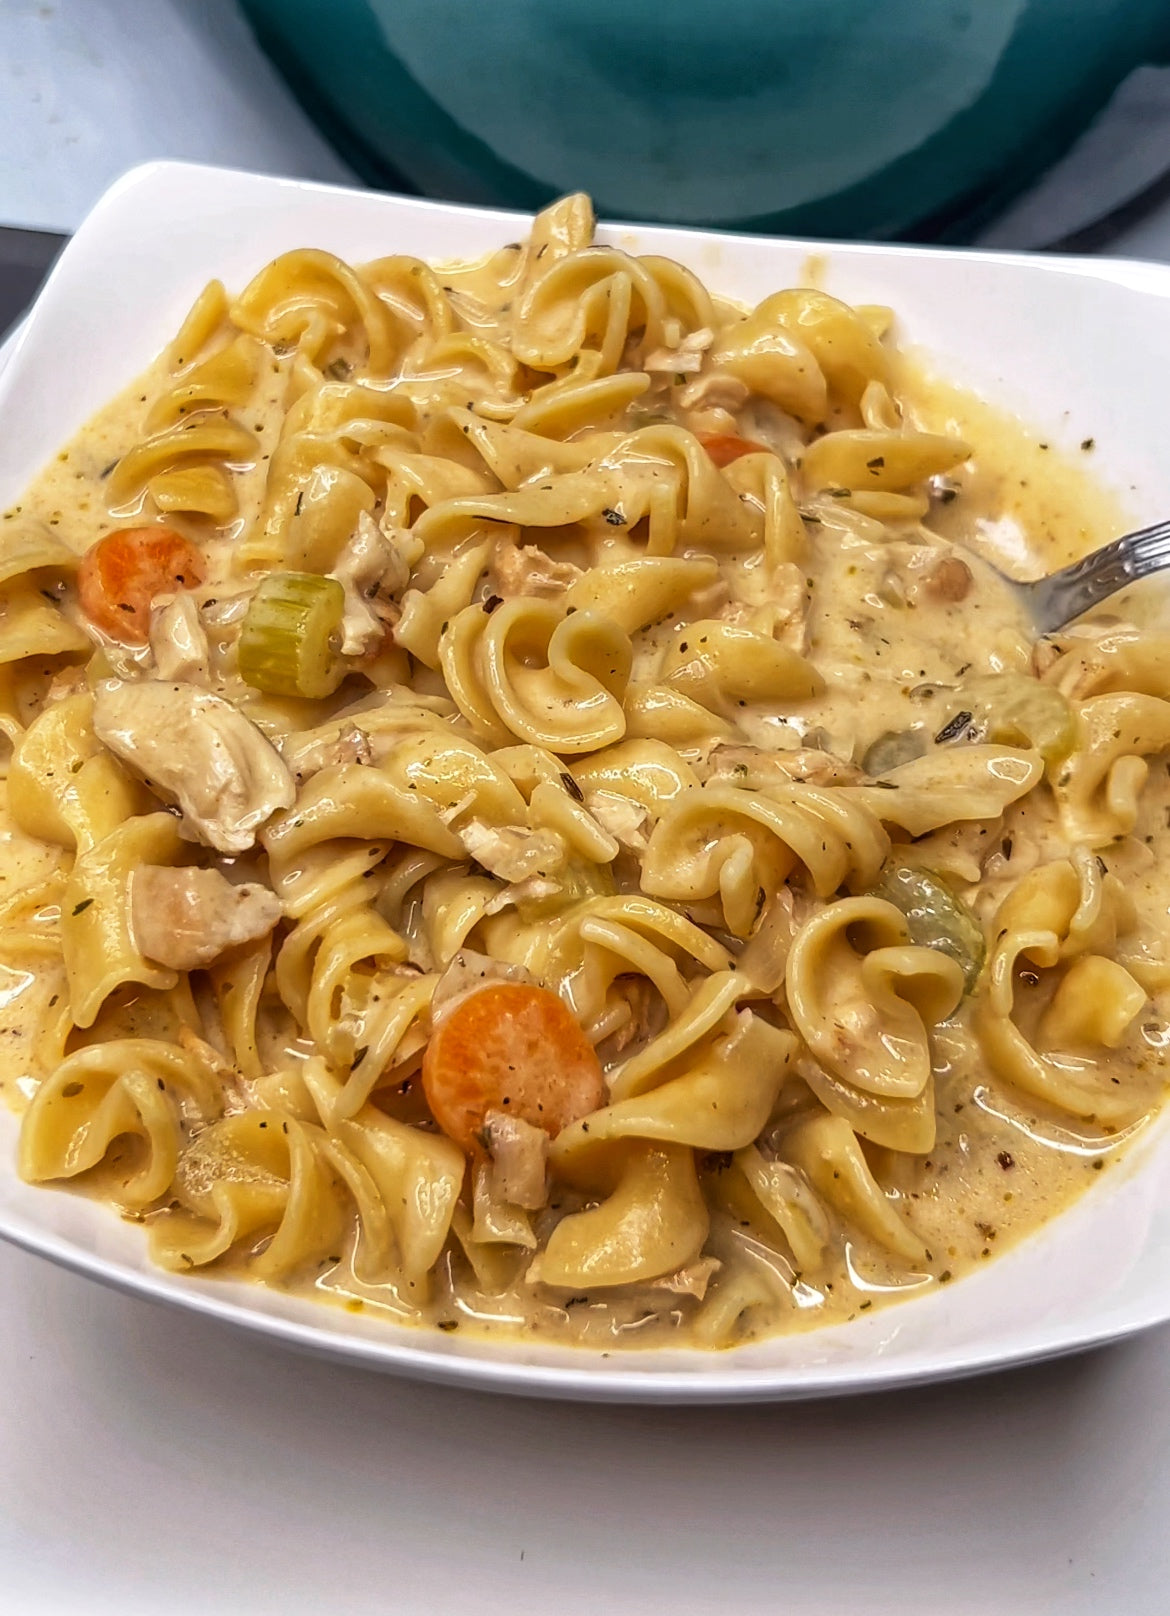 Chicken noodle soup “creamy”